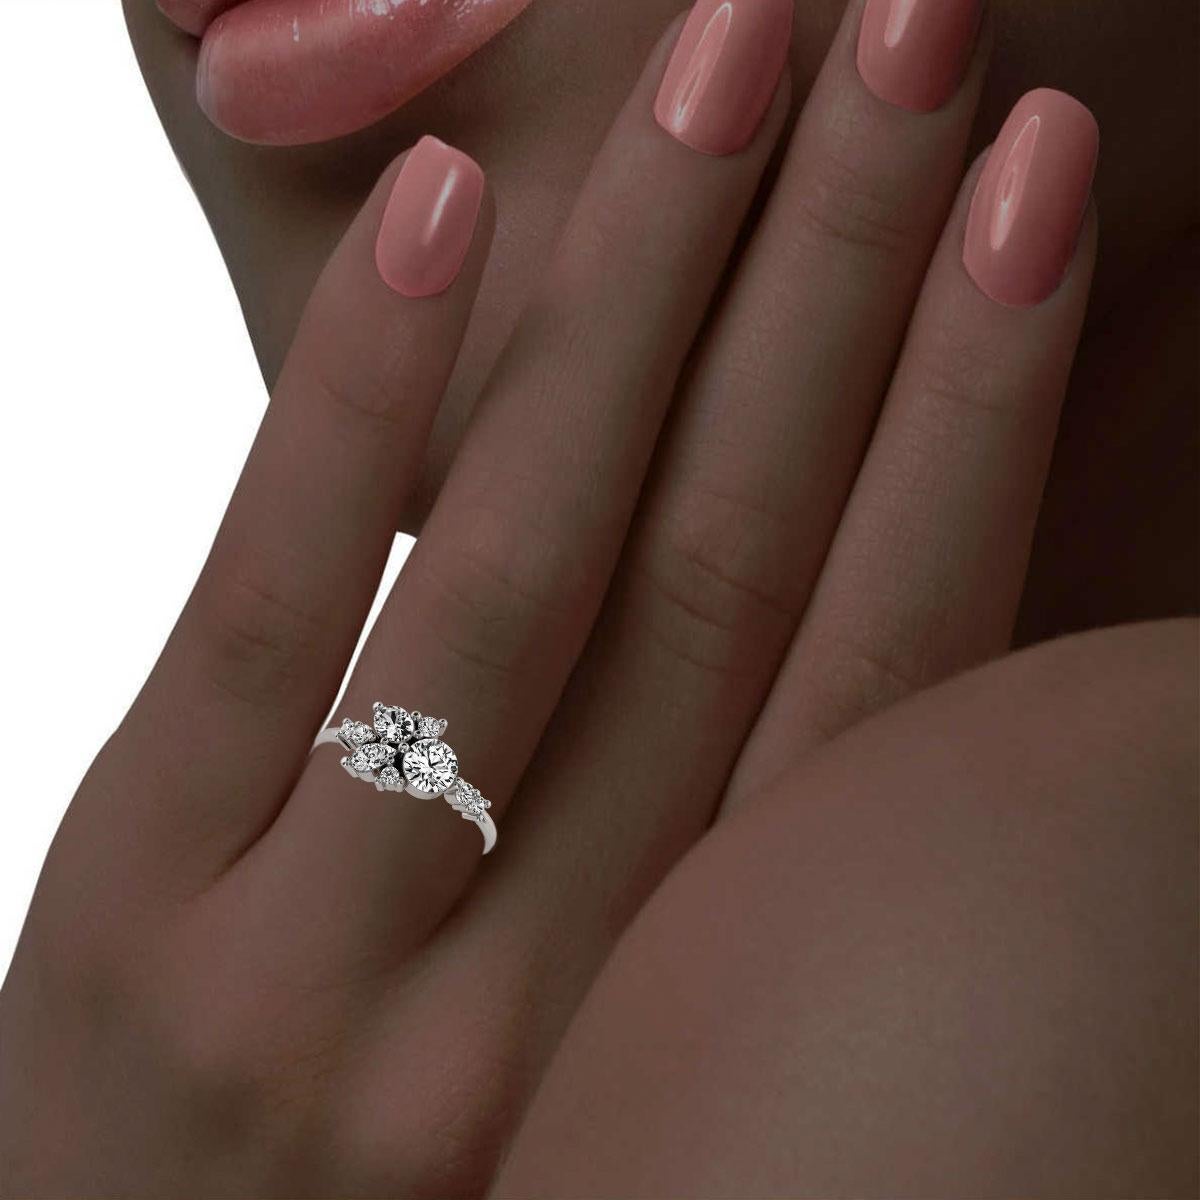 9 diamond ring designs